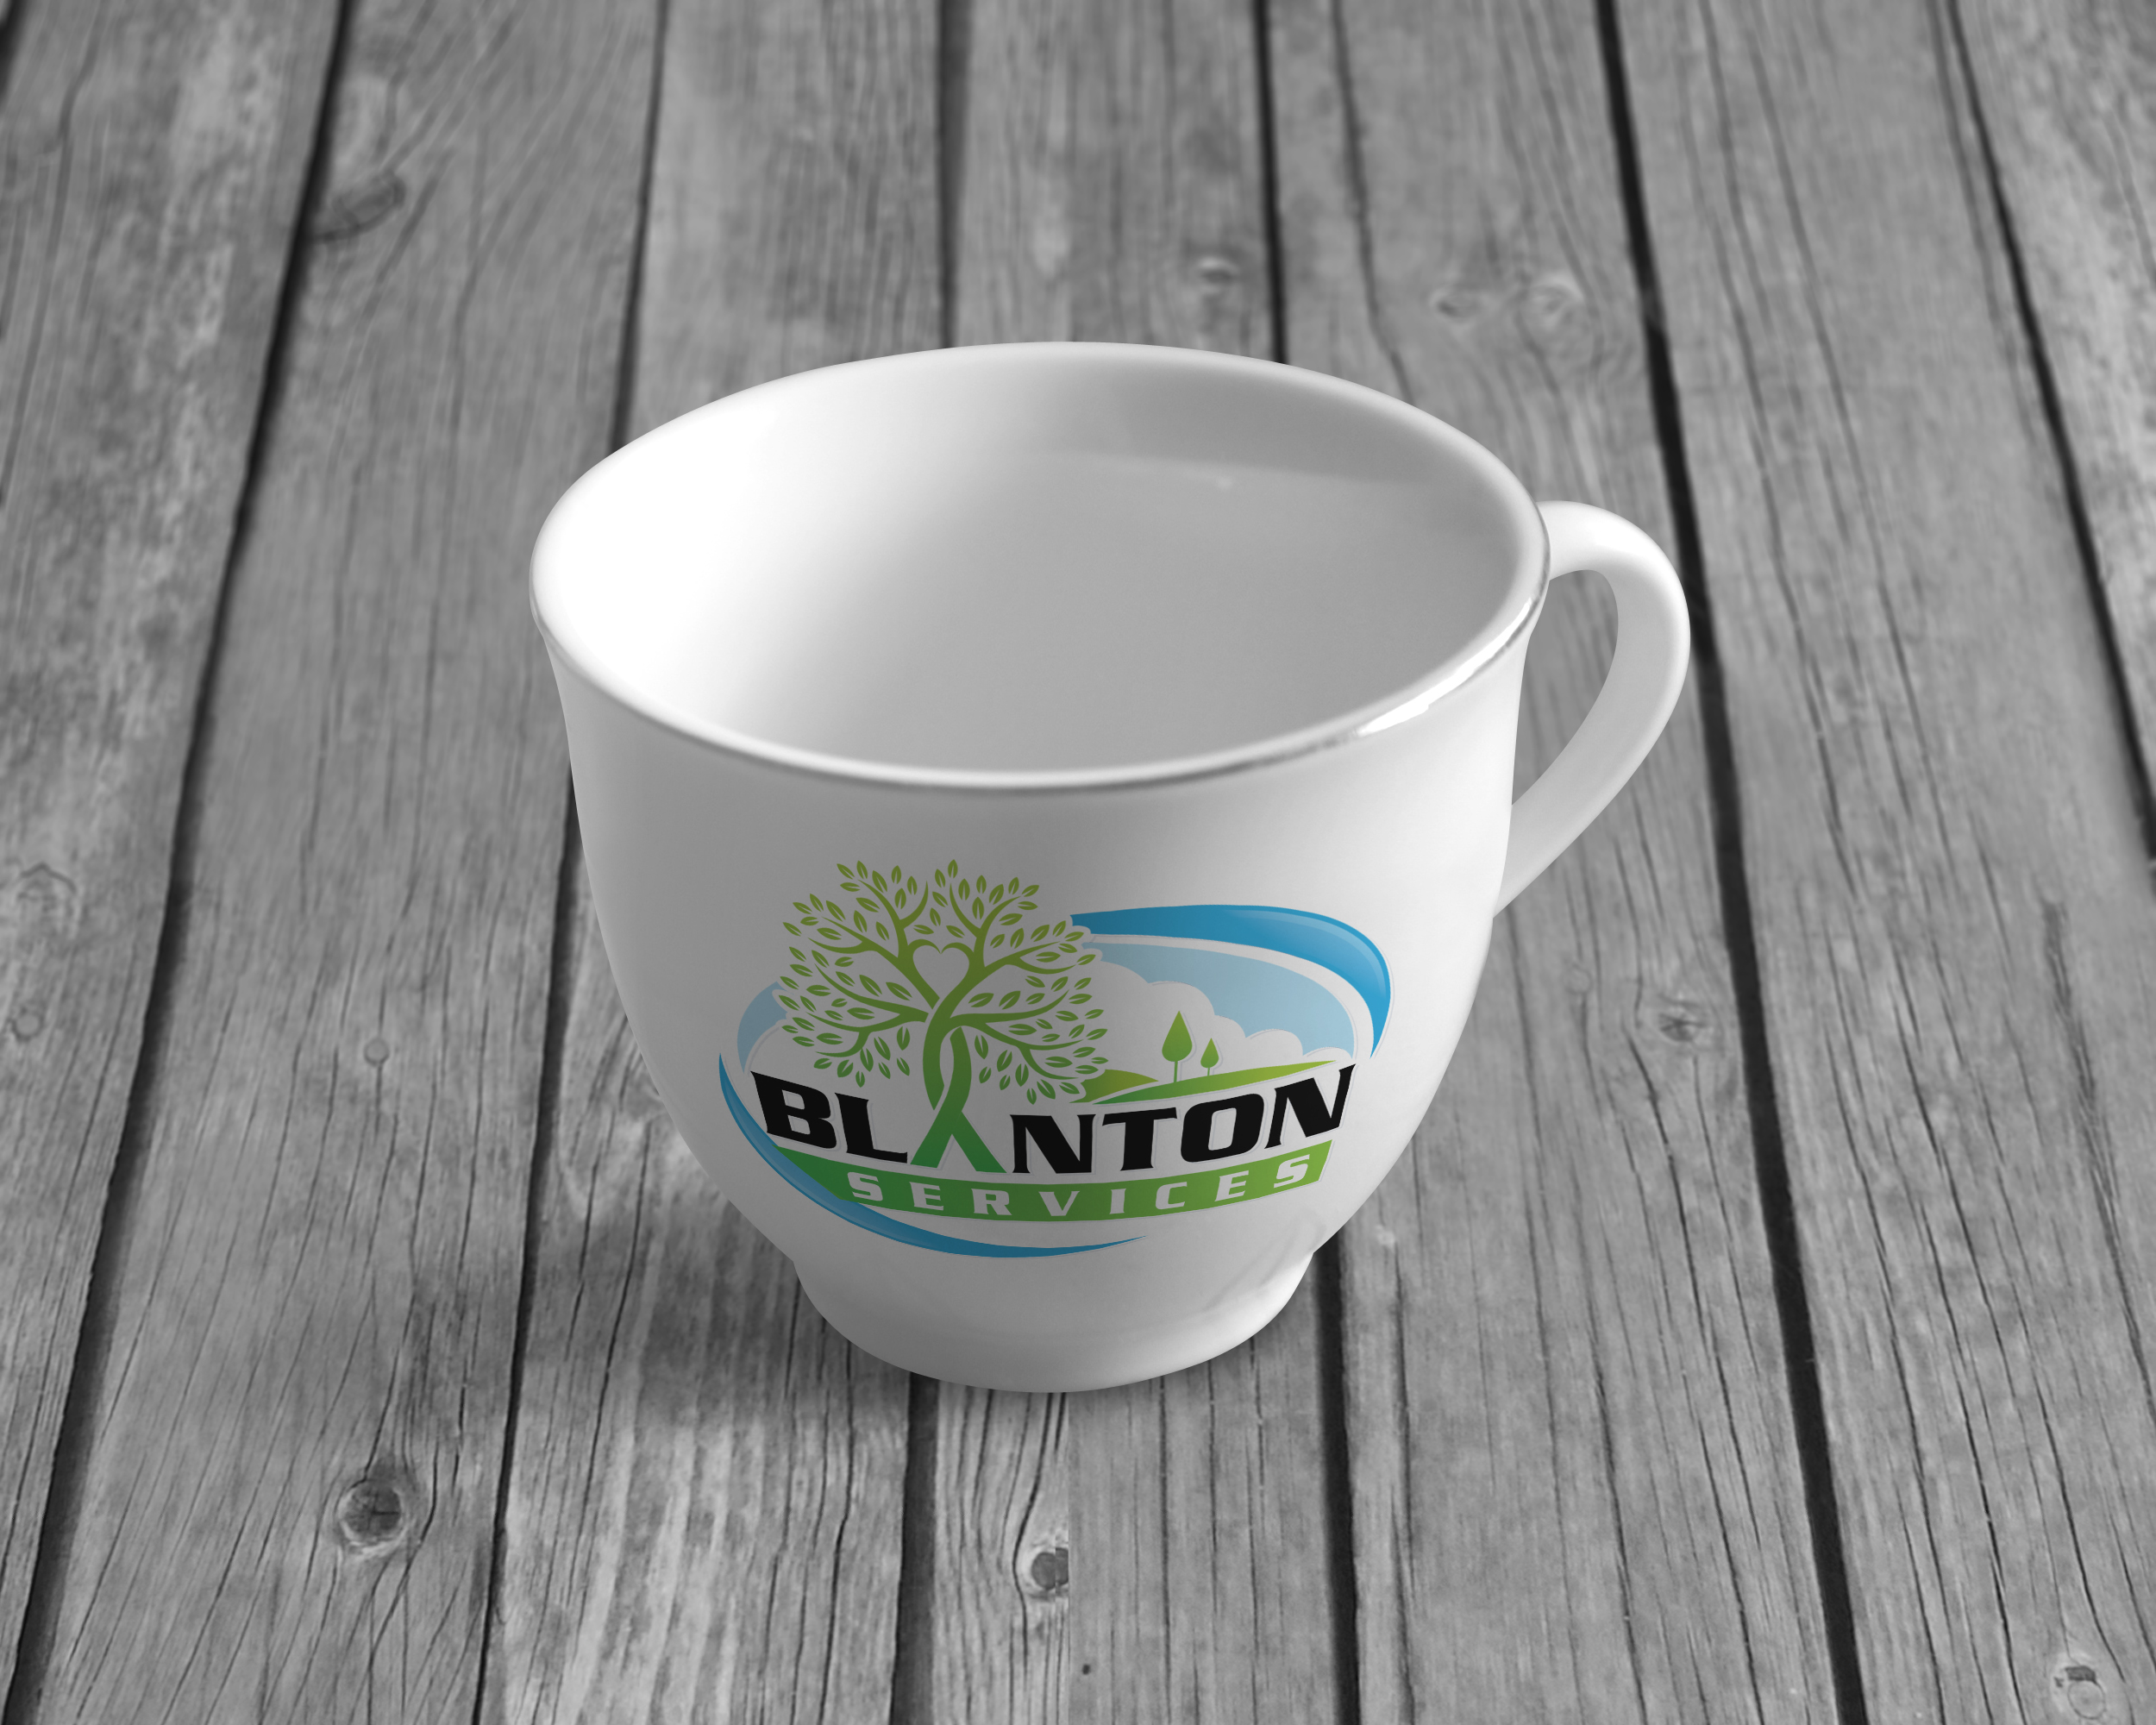 blanton-services-mug